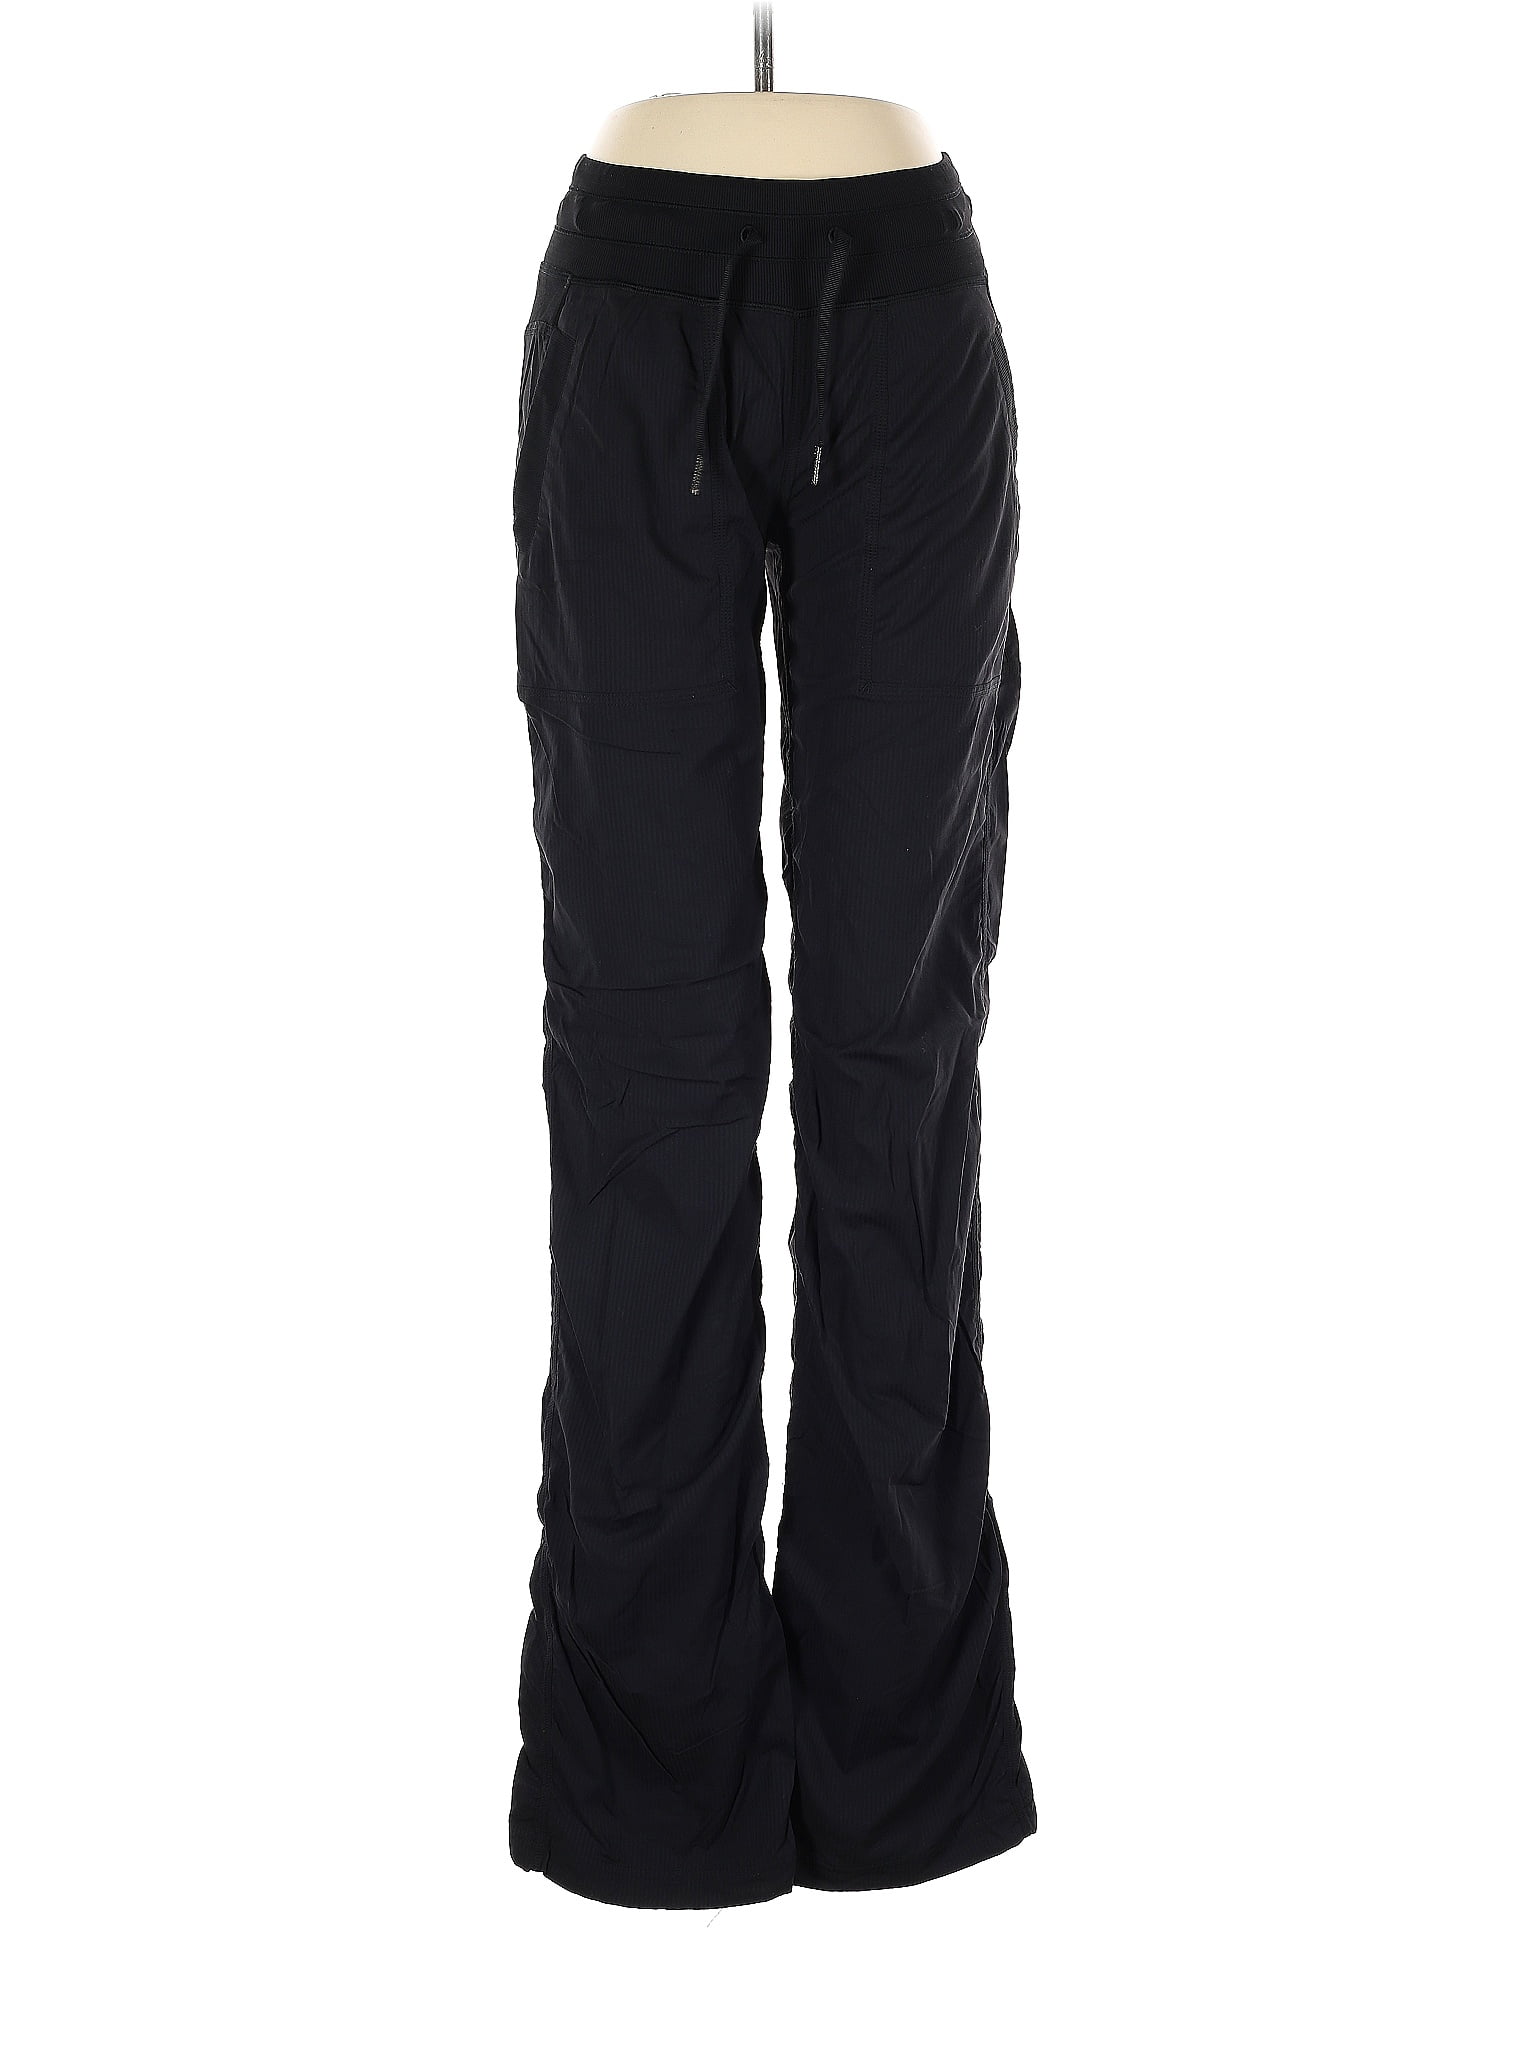 Lululemon Athletica Black Active Pants Size 4 (Tall) - 53% off | ThredUp